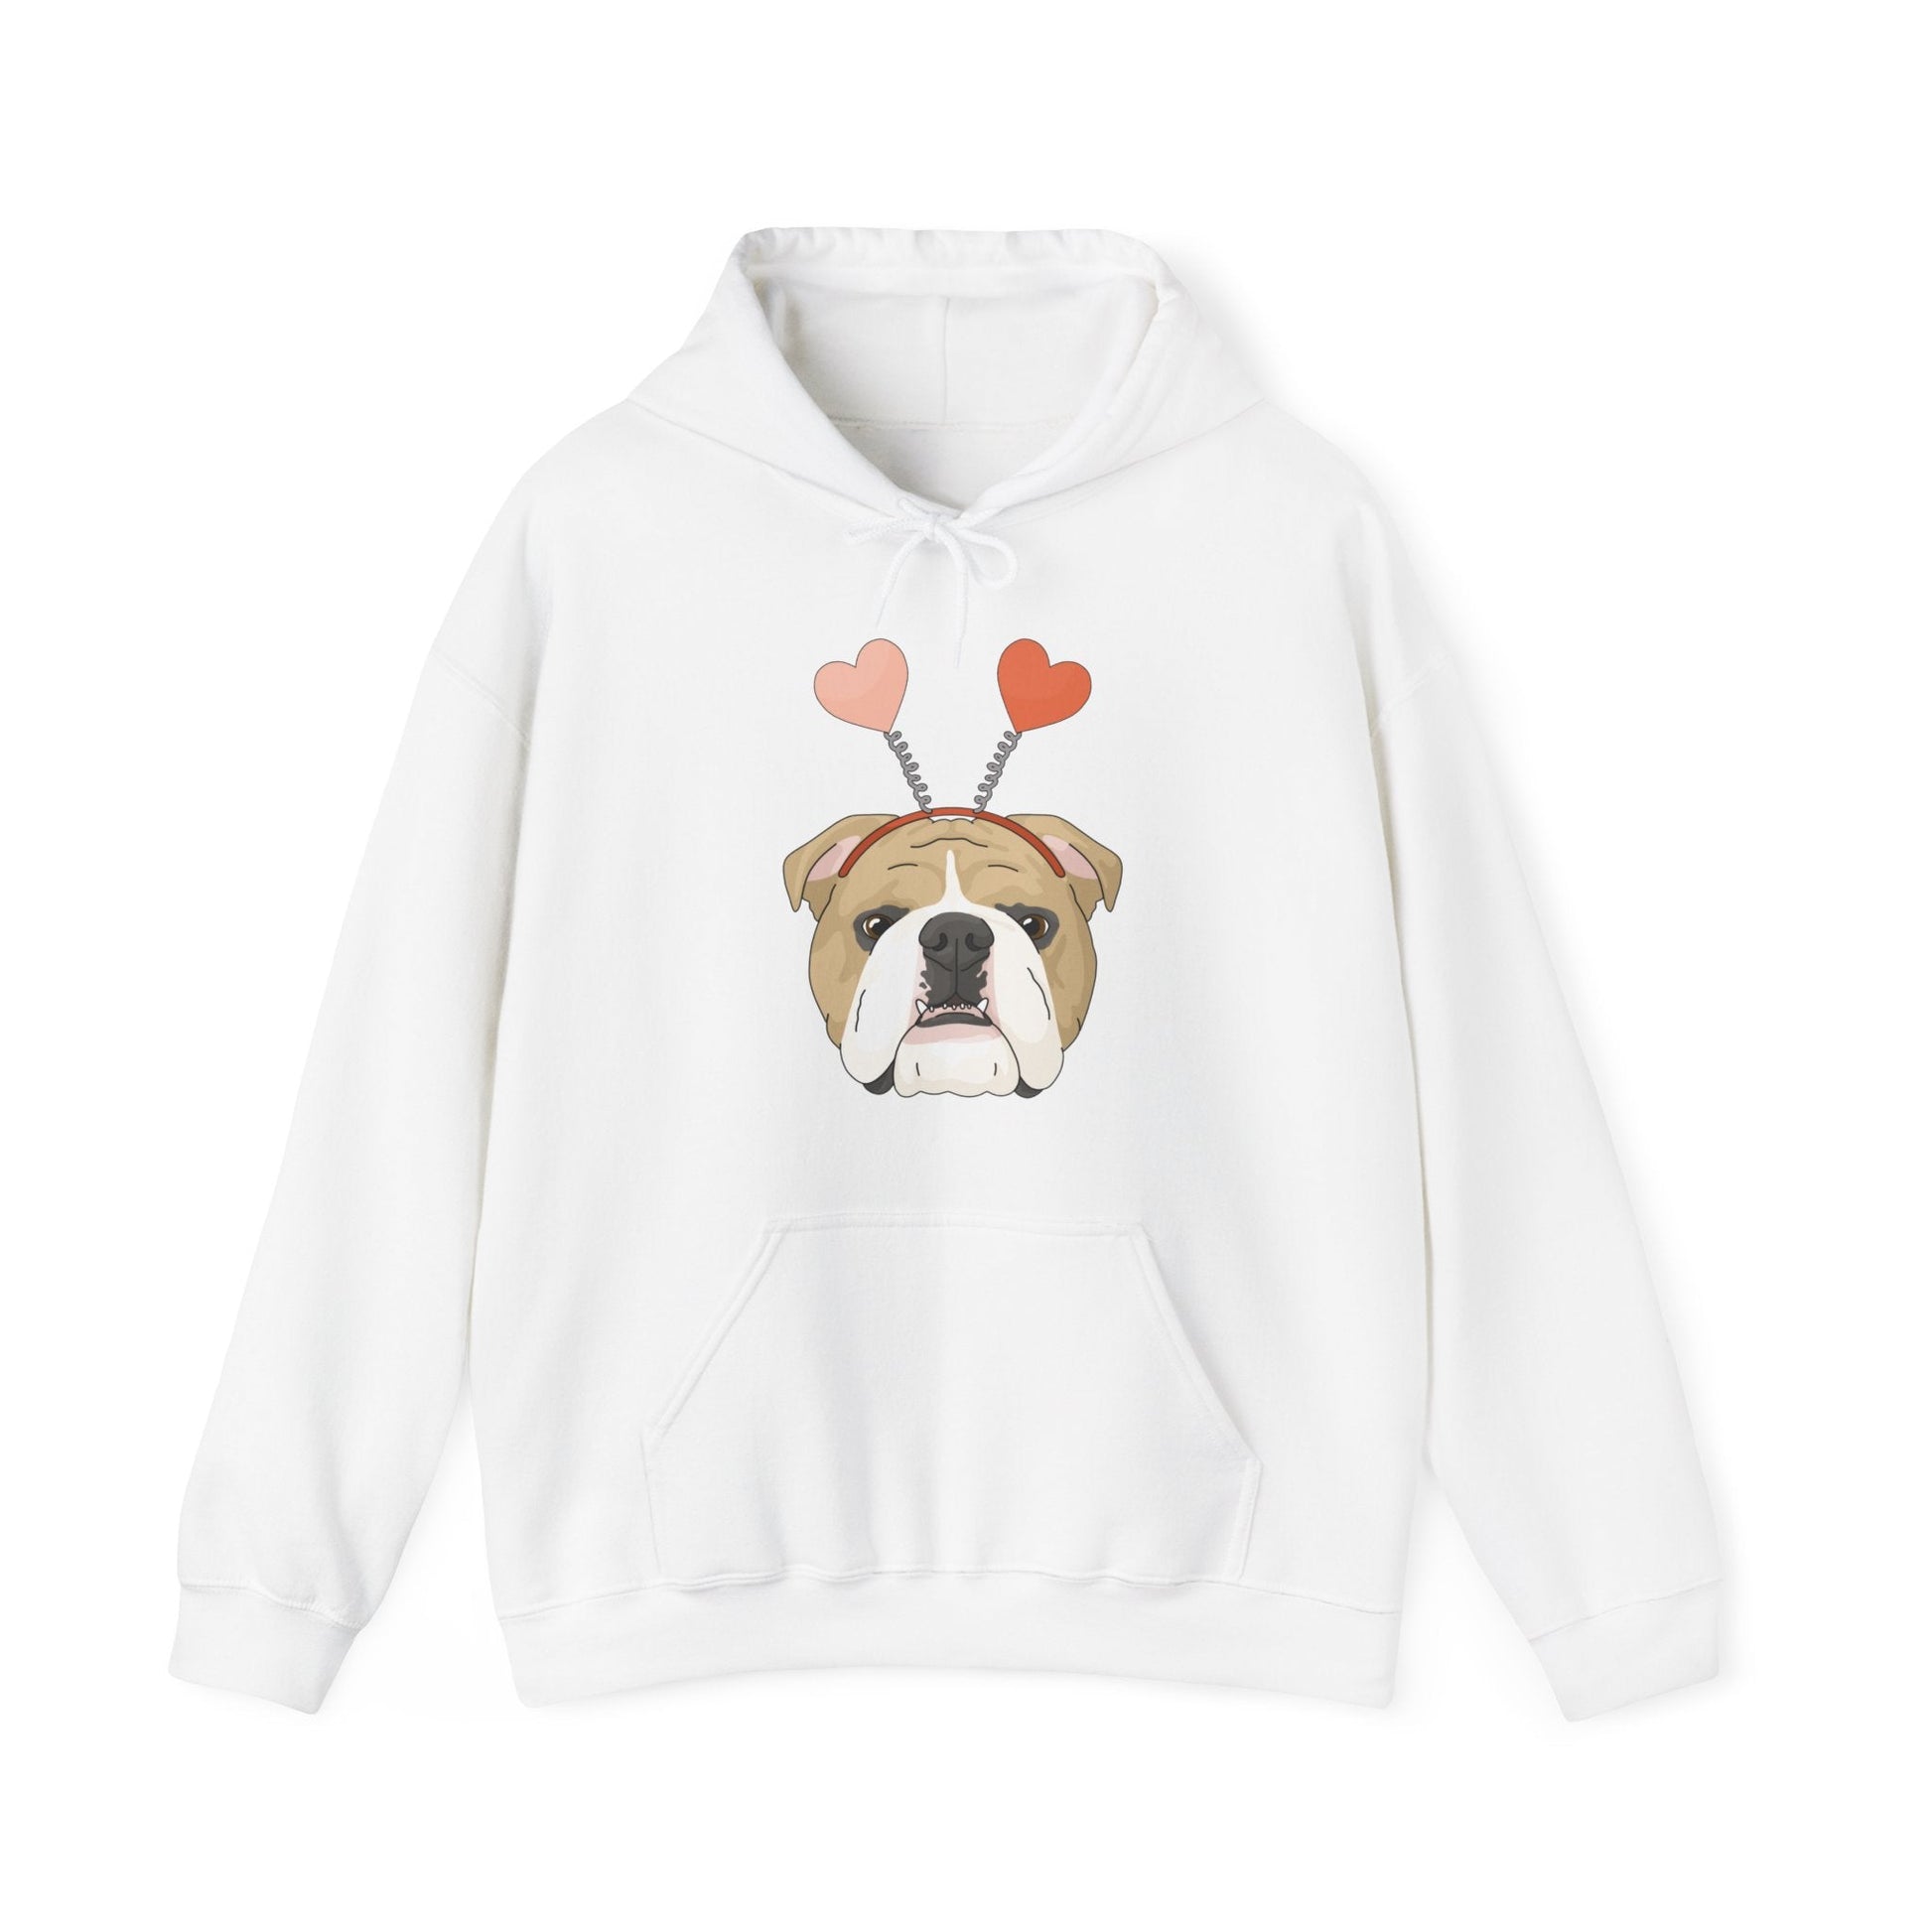 A Very Bulldog Valentine | Hooded Sweatshirt - Detezi Designs-11238852023511558305